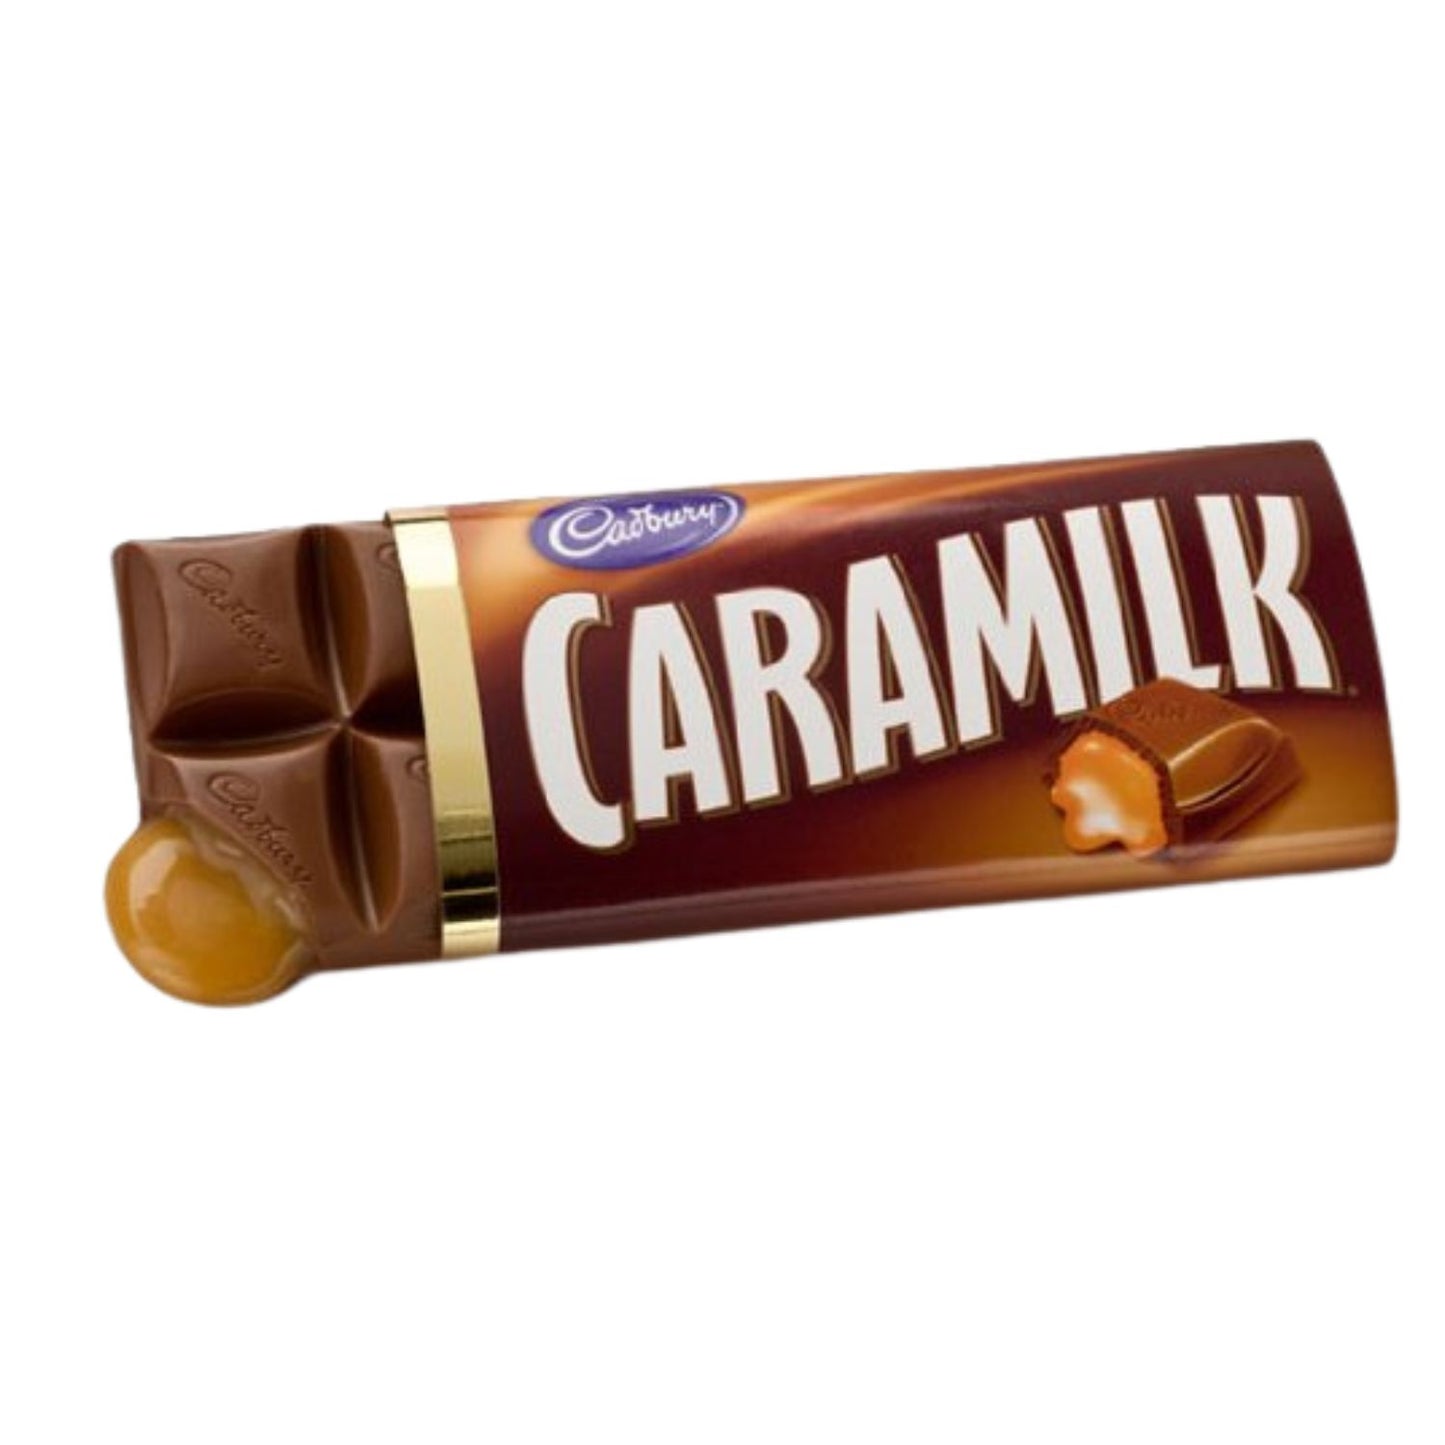 Cadbury Caramilk Milk Chocolate Bars  52g/1.8oz (Shipped from Canada)